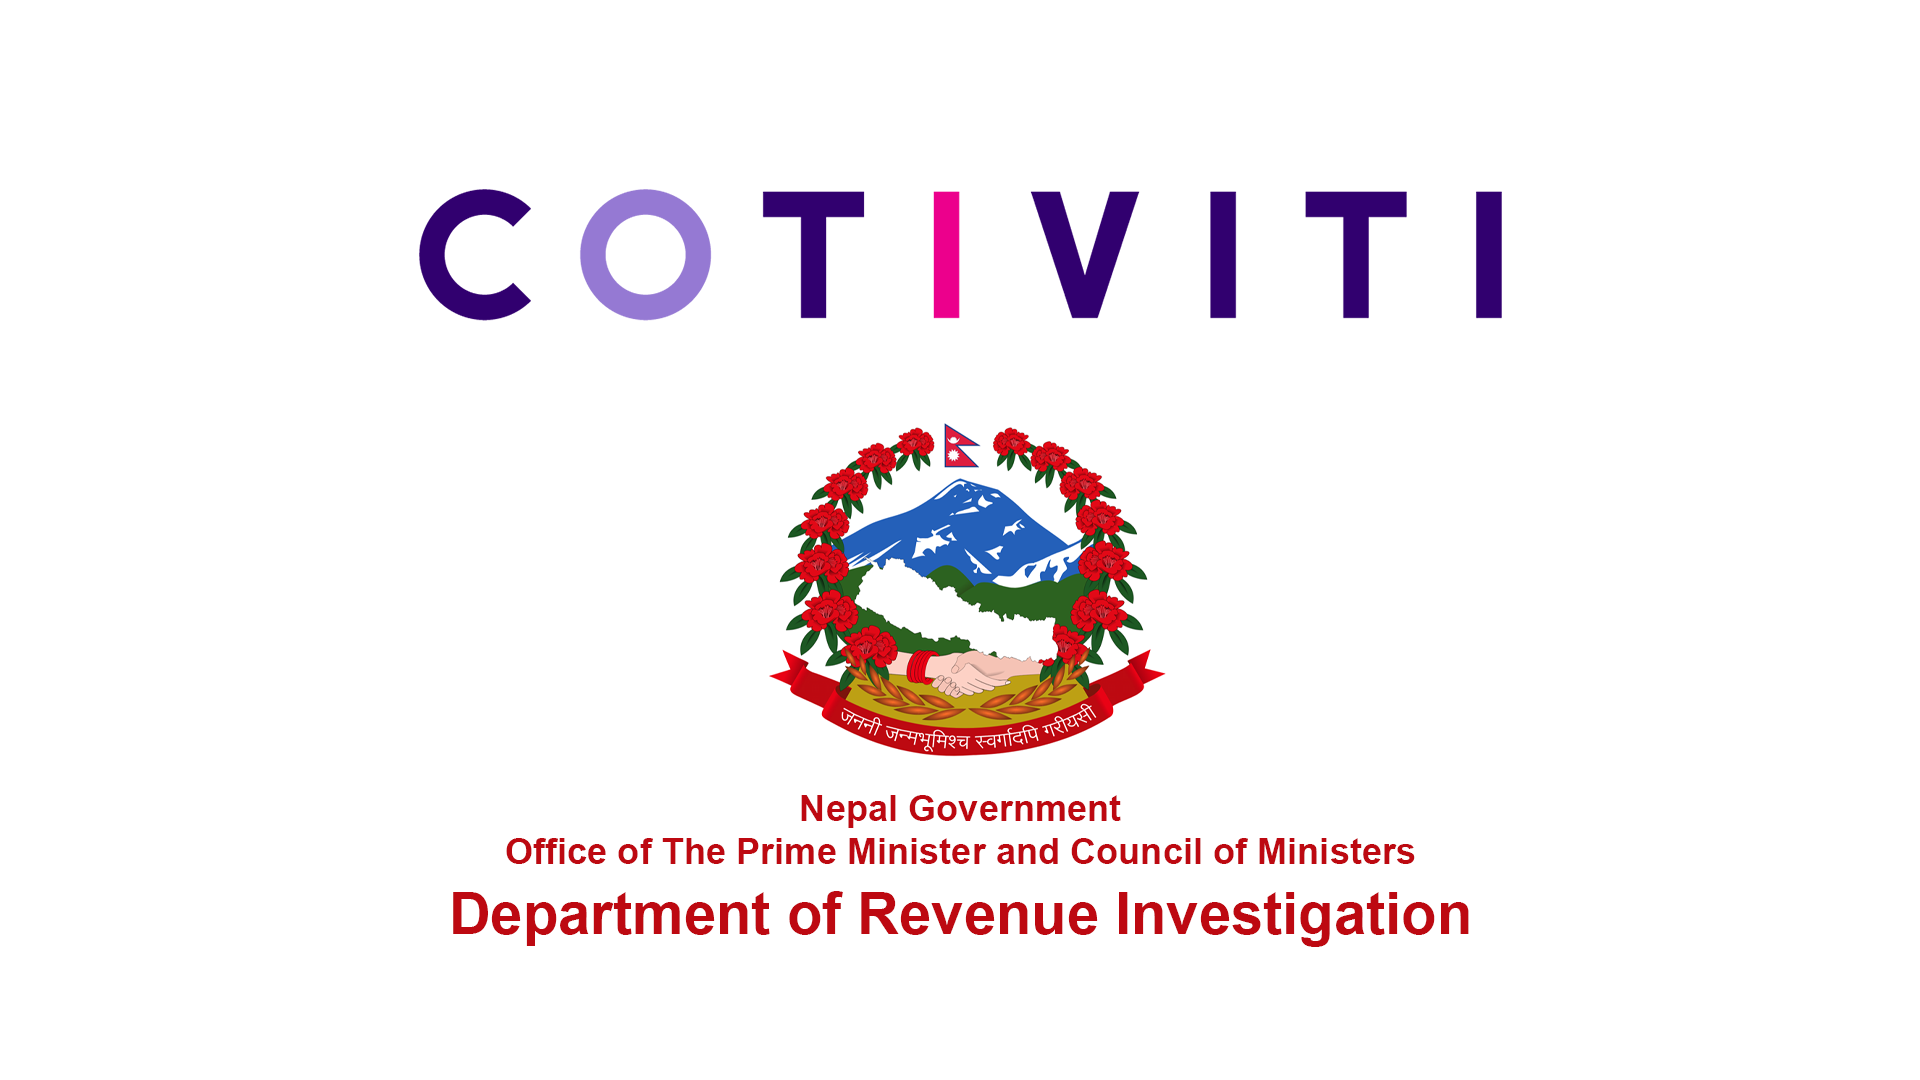 DRI Files Tax Evasion Charges Against IT Company Cotiviti Nepal, Demands Rs. 10.36 Billion